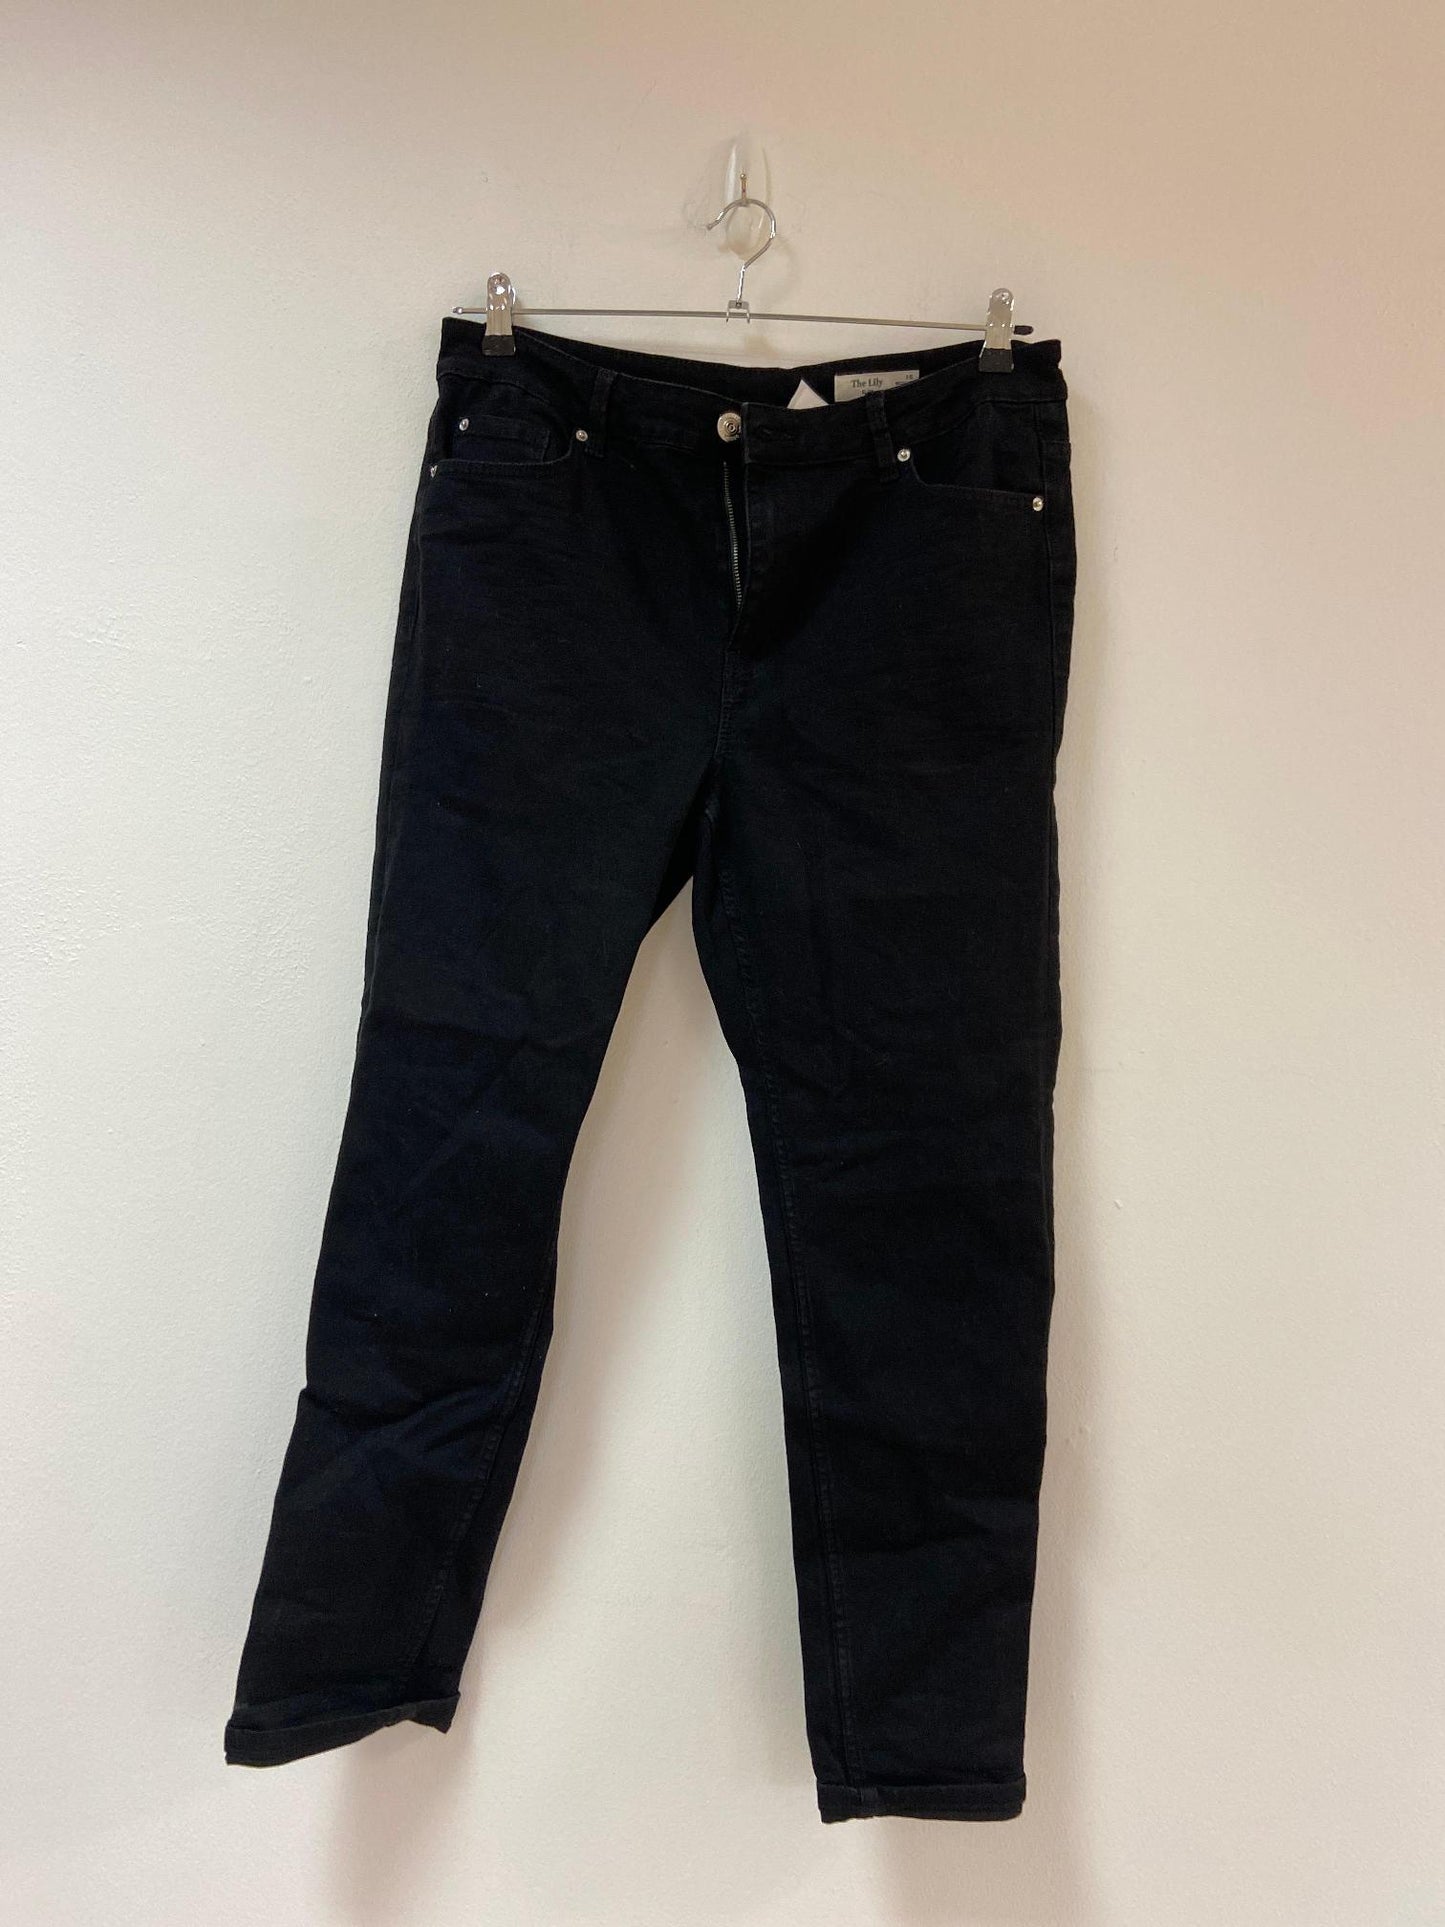 Slim black jeans, M&S, Size 16 - Damaged Item Sale